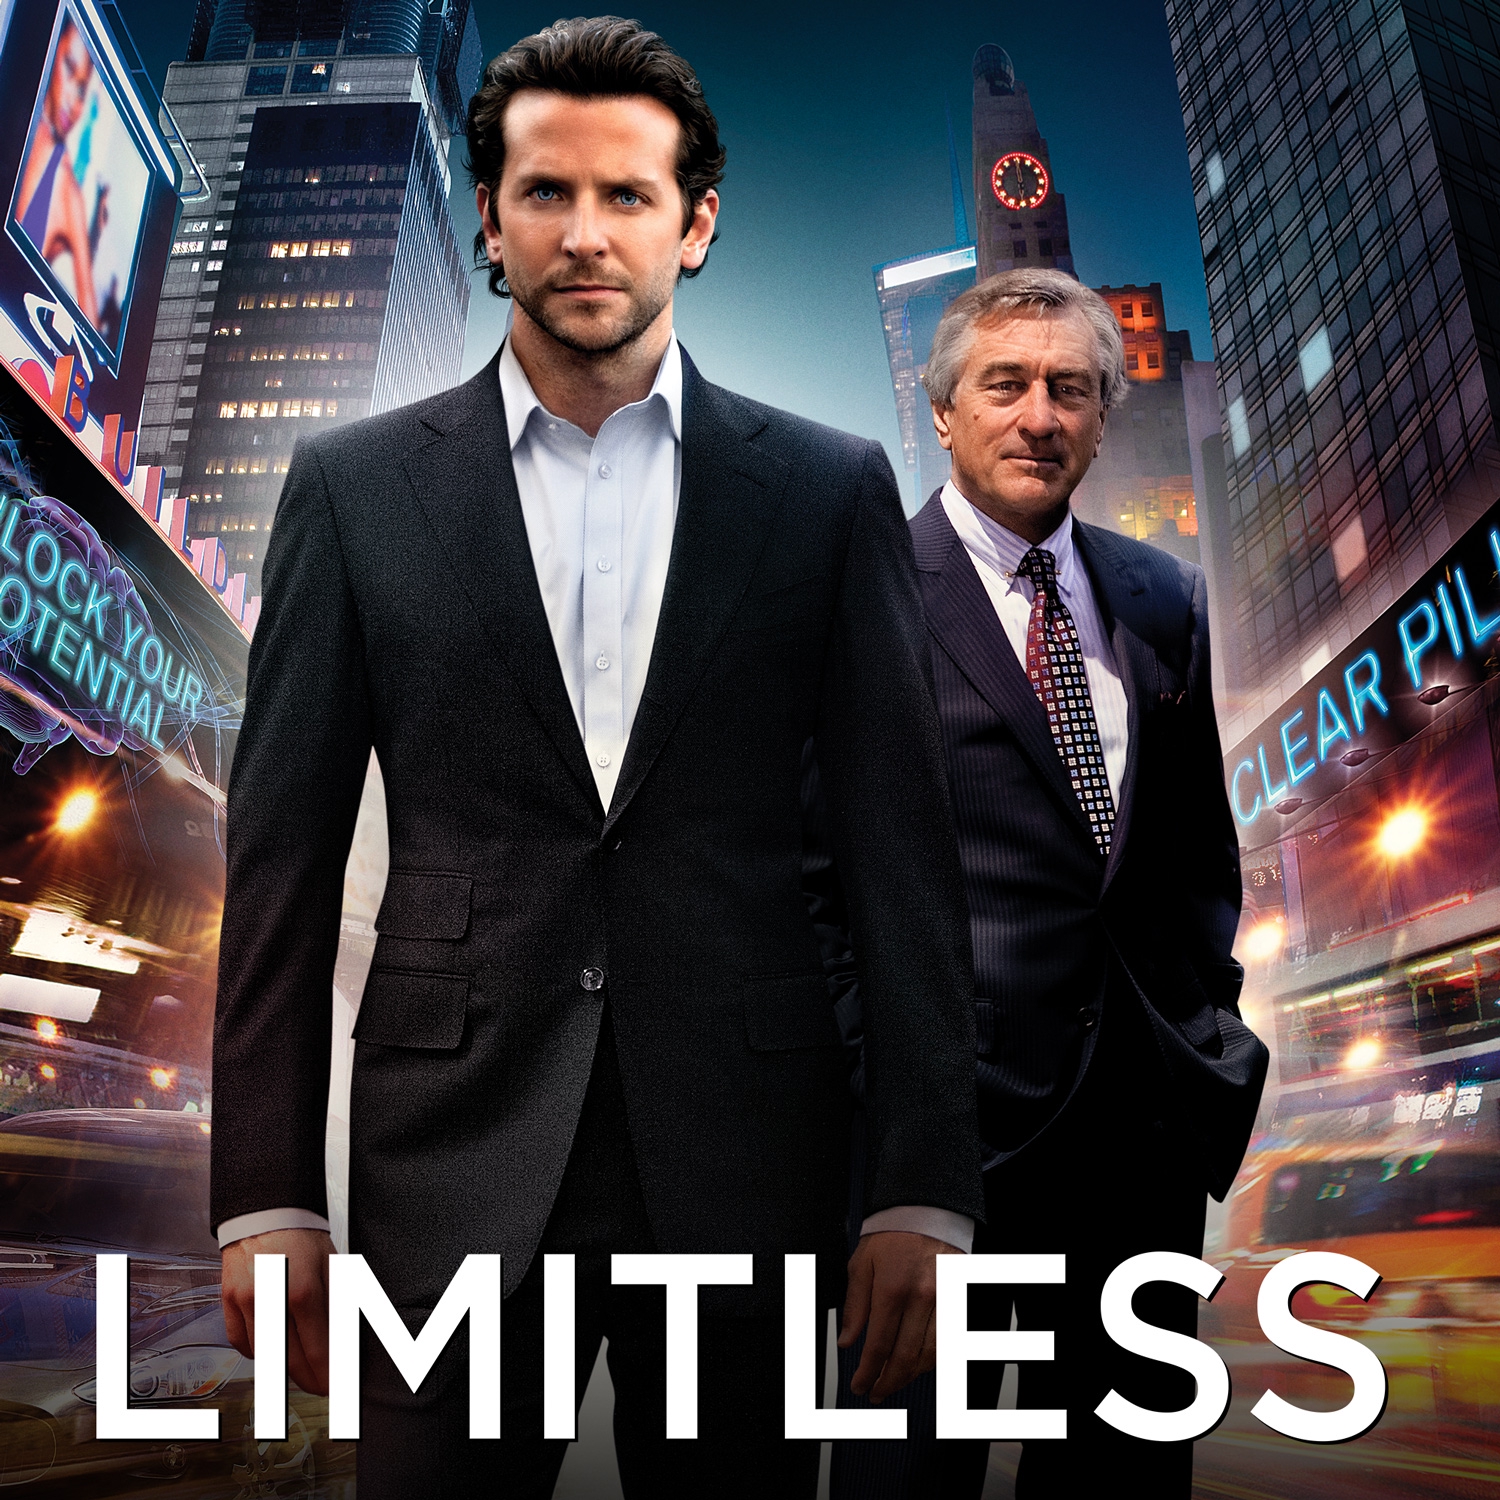  Limitless : Bradley Cooper, Anna Friel, Abbie Cornish, Robert  De Niro, Andrew Howard, Neil Burger: Movies & TV